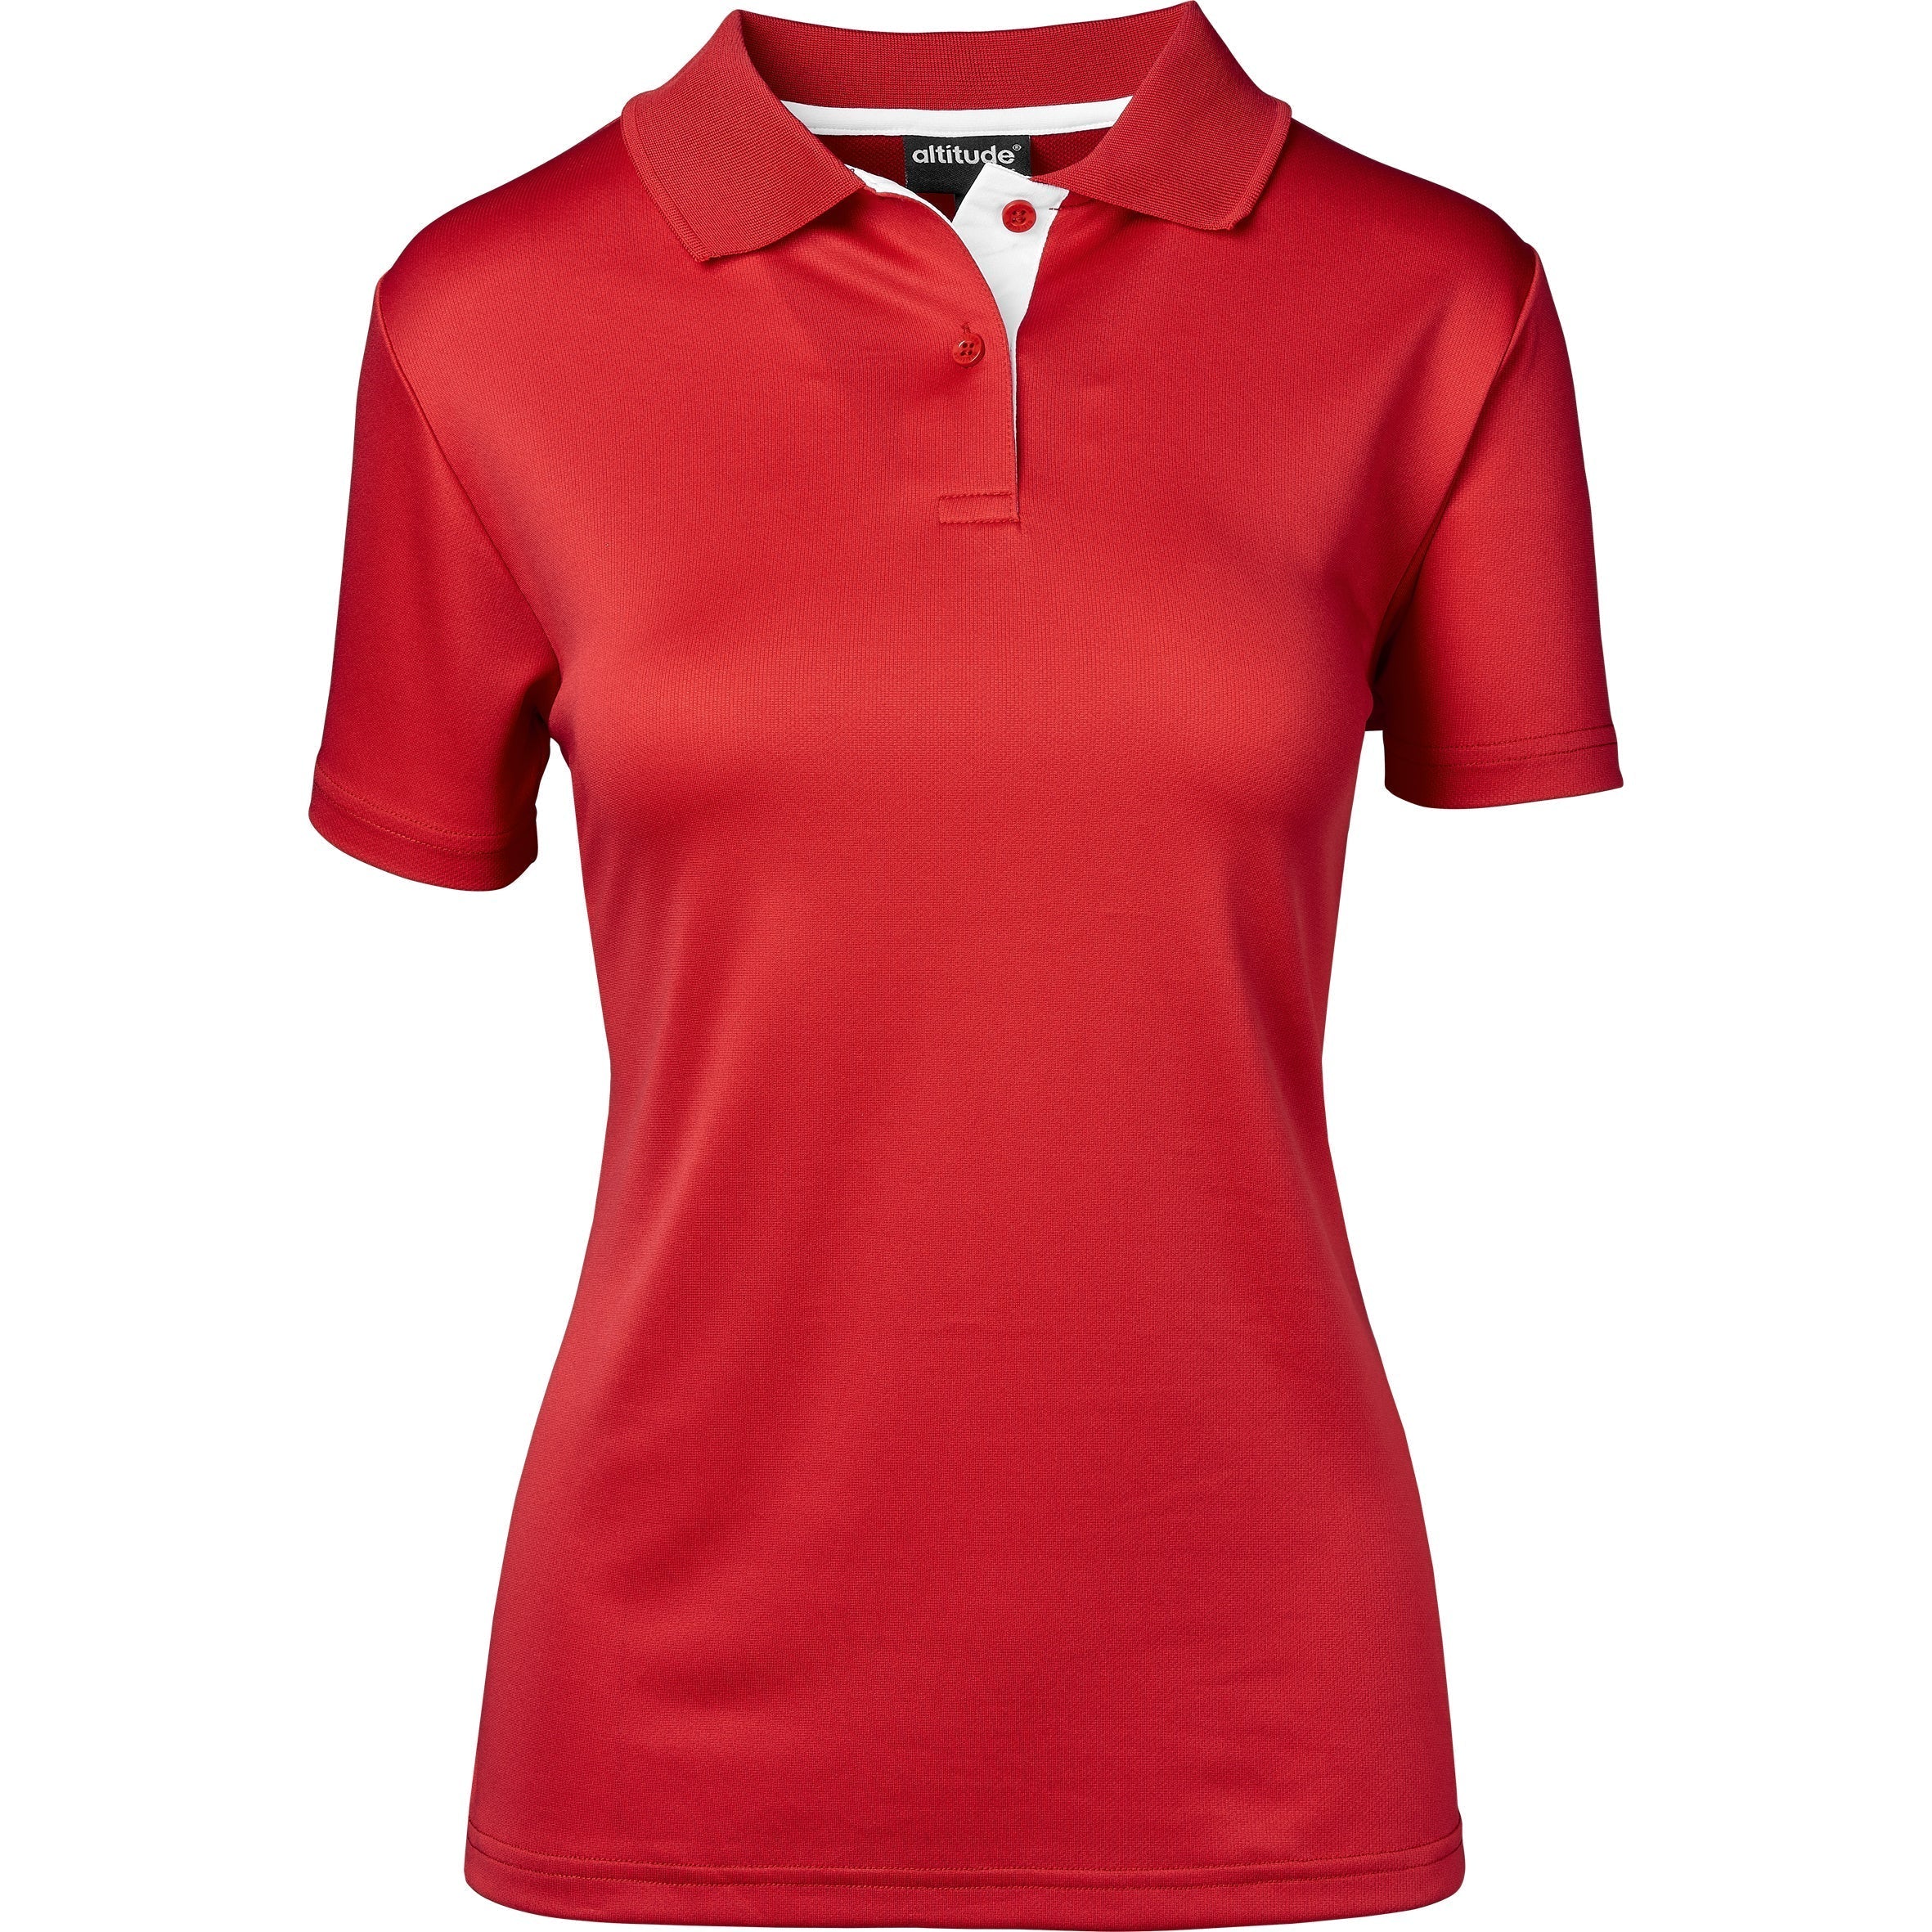 Ladies Tournament Golf Shirt-